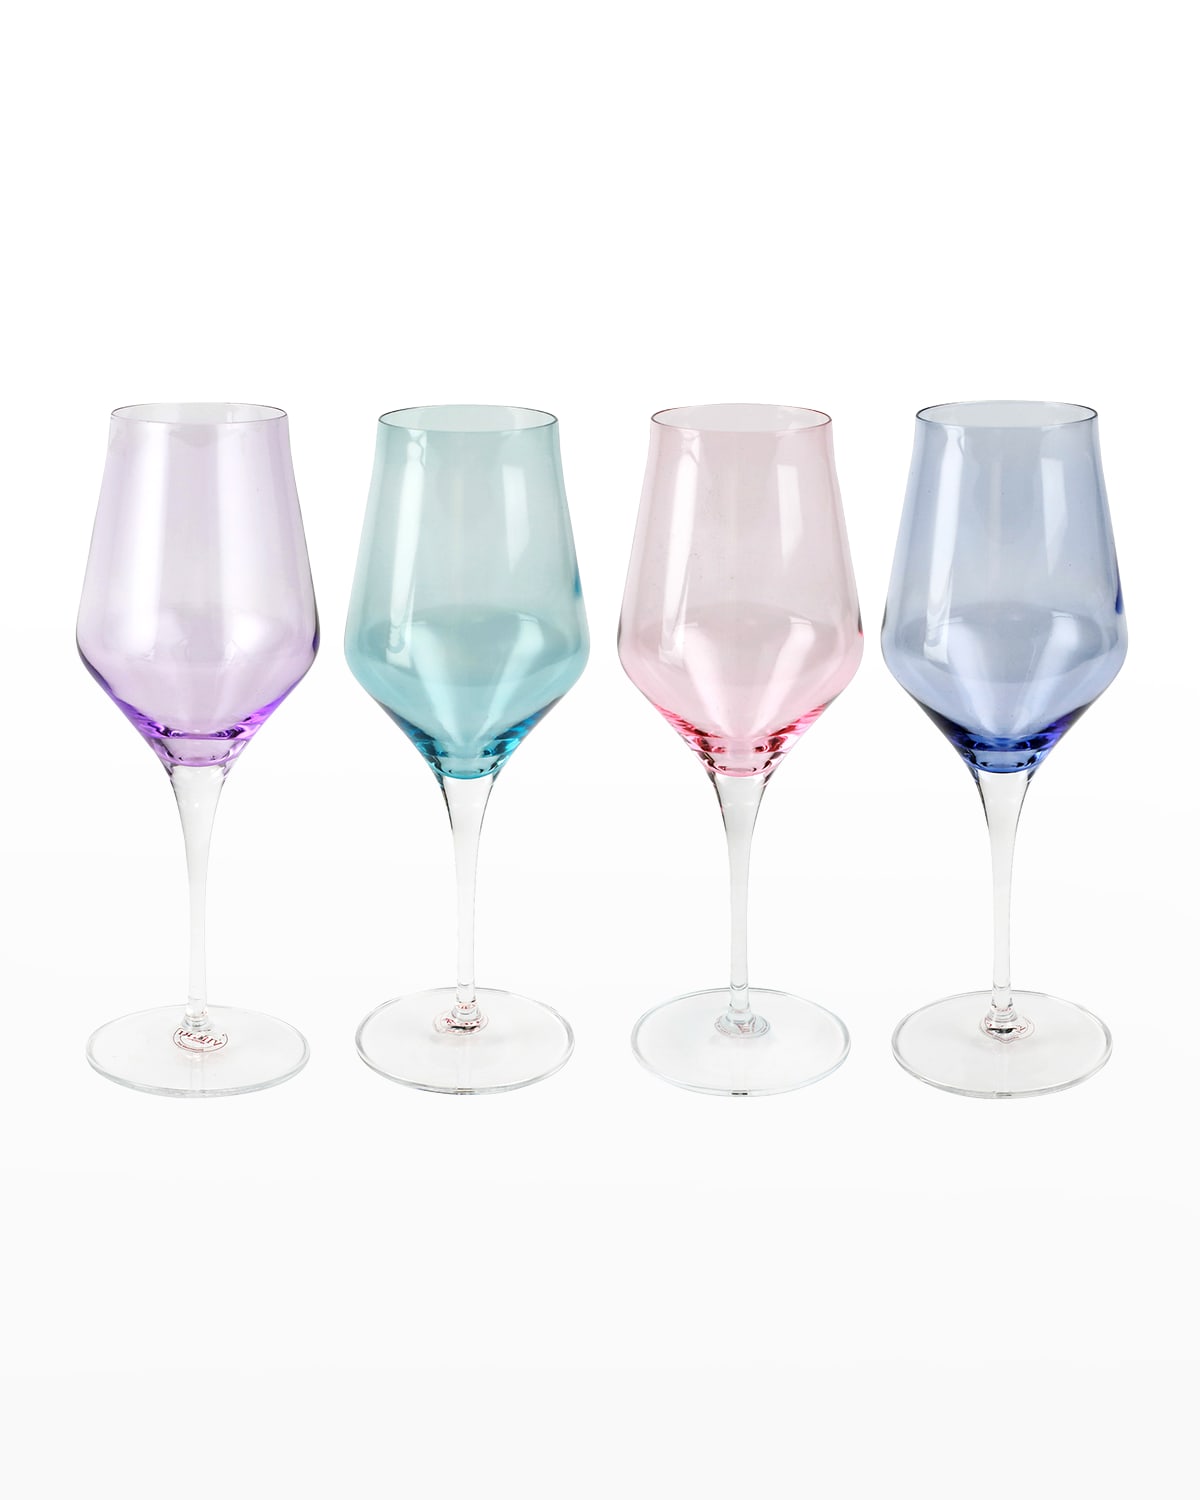 Vietri Contessa Assorted Water Glasses, Set Of 4